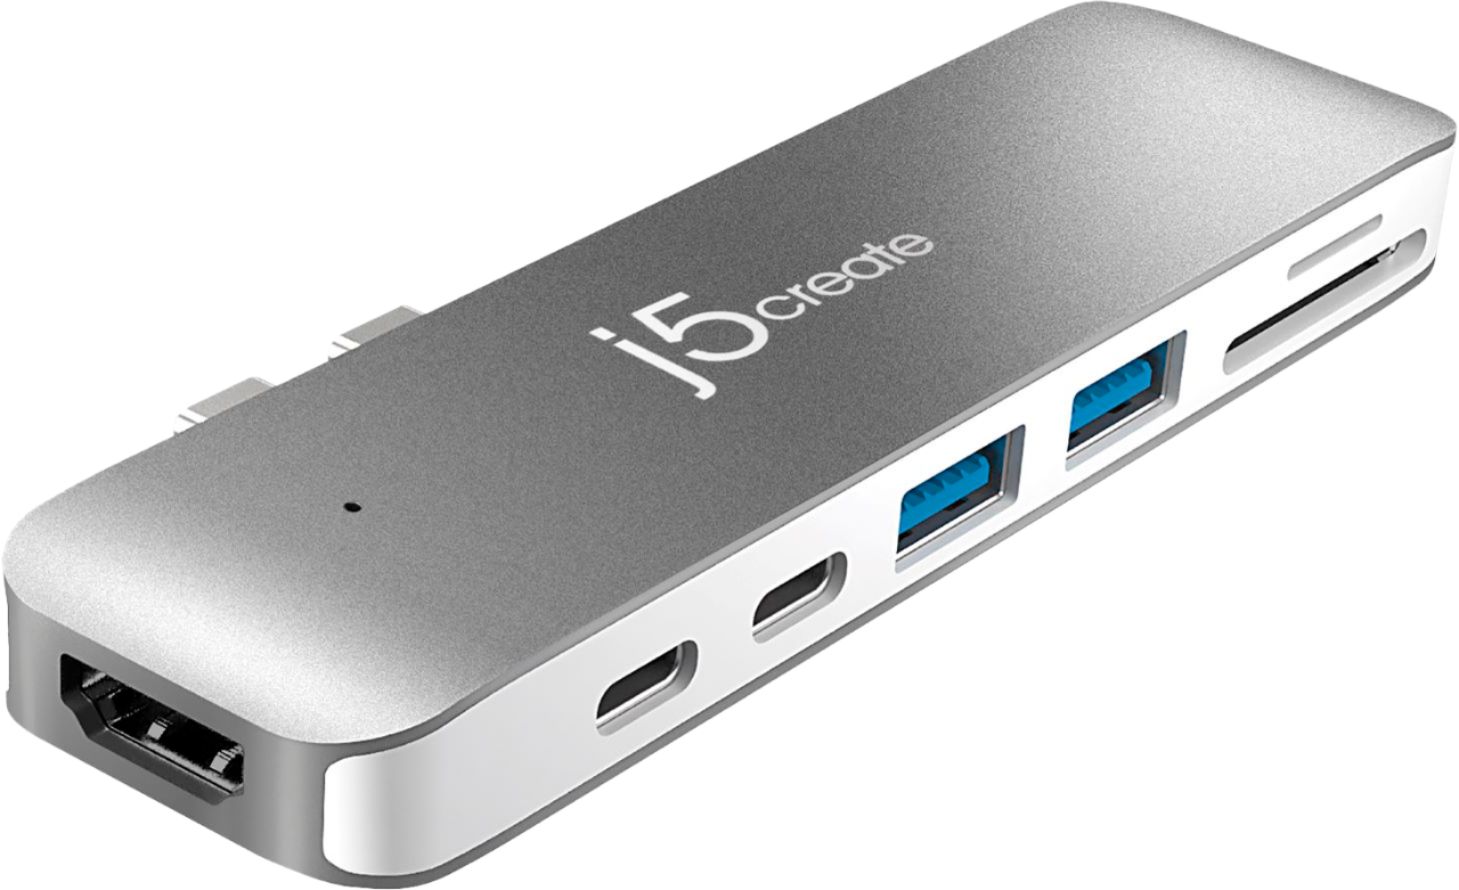 j5create JCD382 Ultra Drive Mini Dock for Select Apple MacBook Laptops - silver $36.99